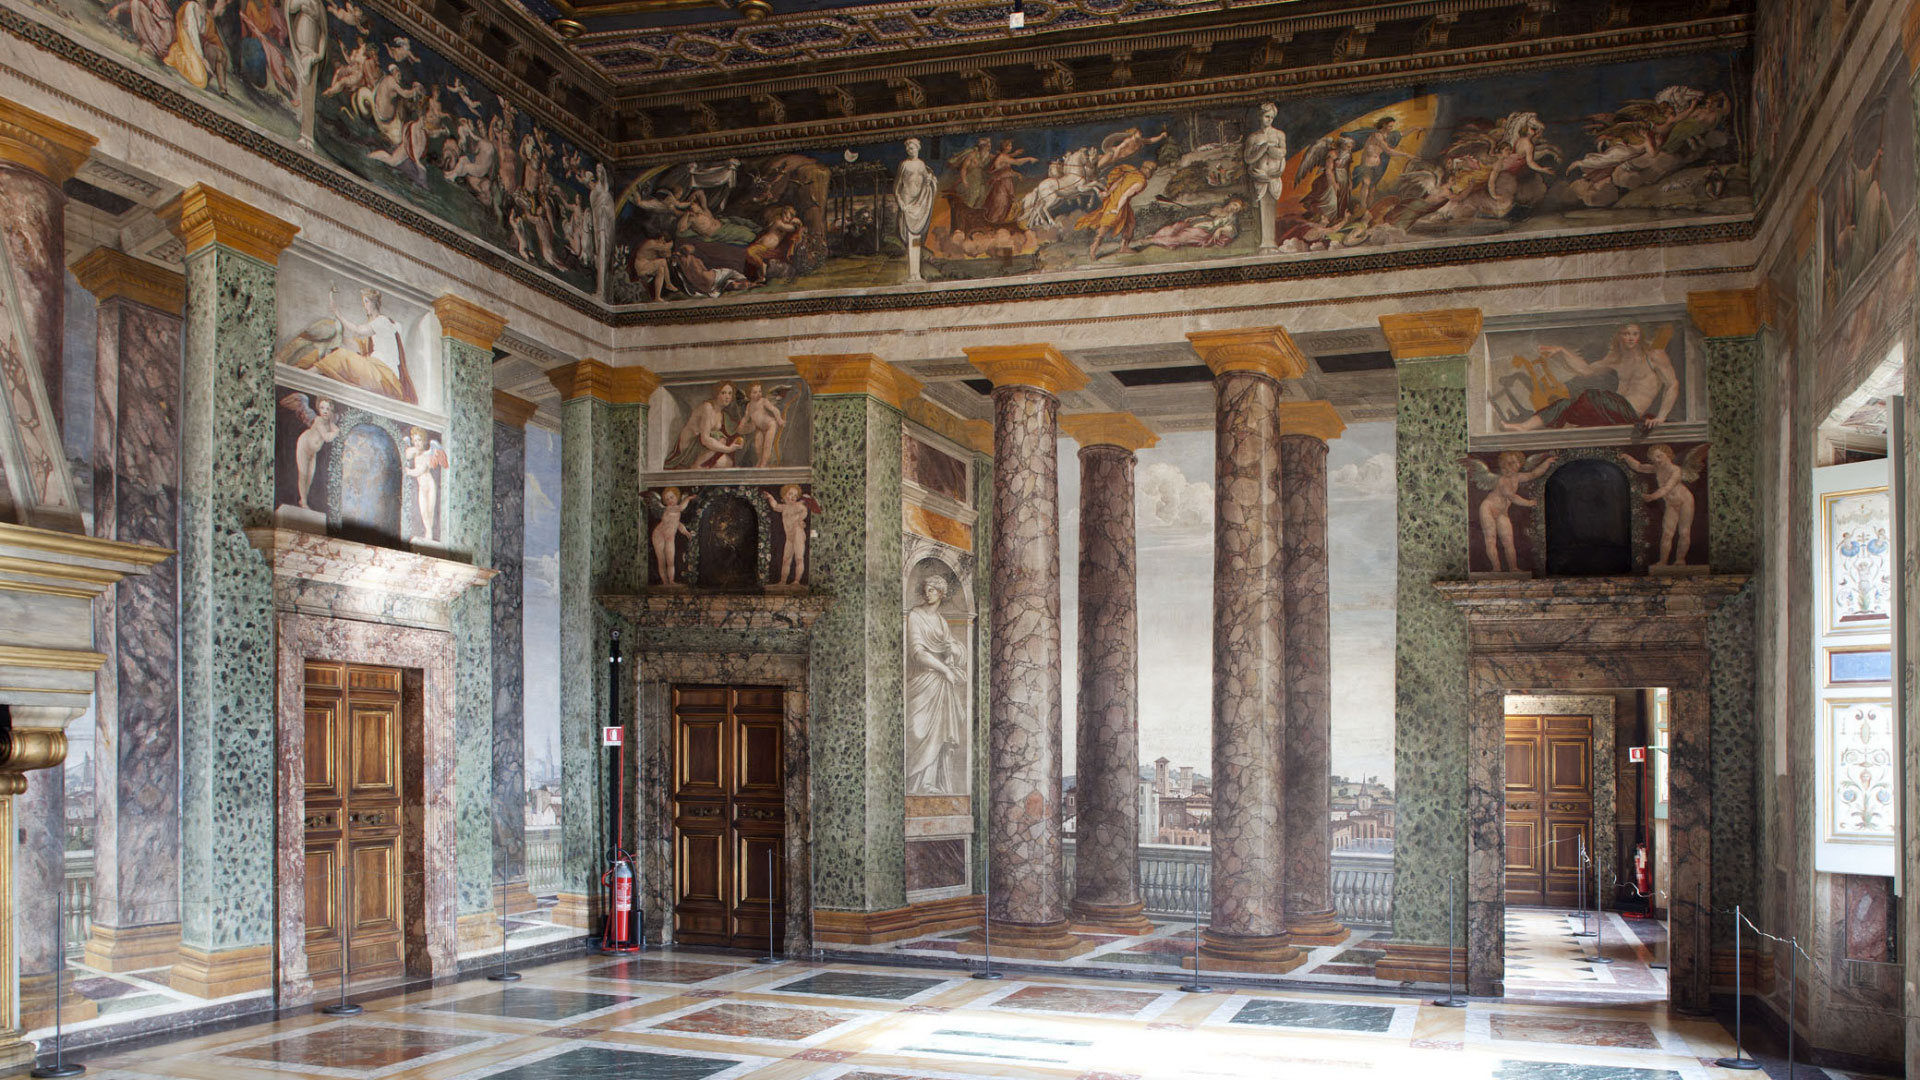 Painted Architecture from Bramante to Baldassarre Peruzzi